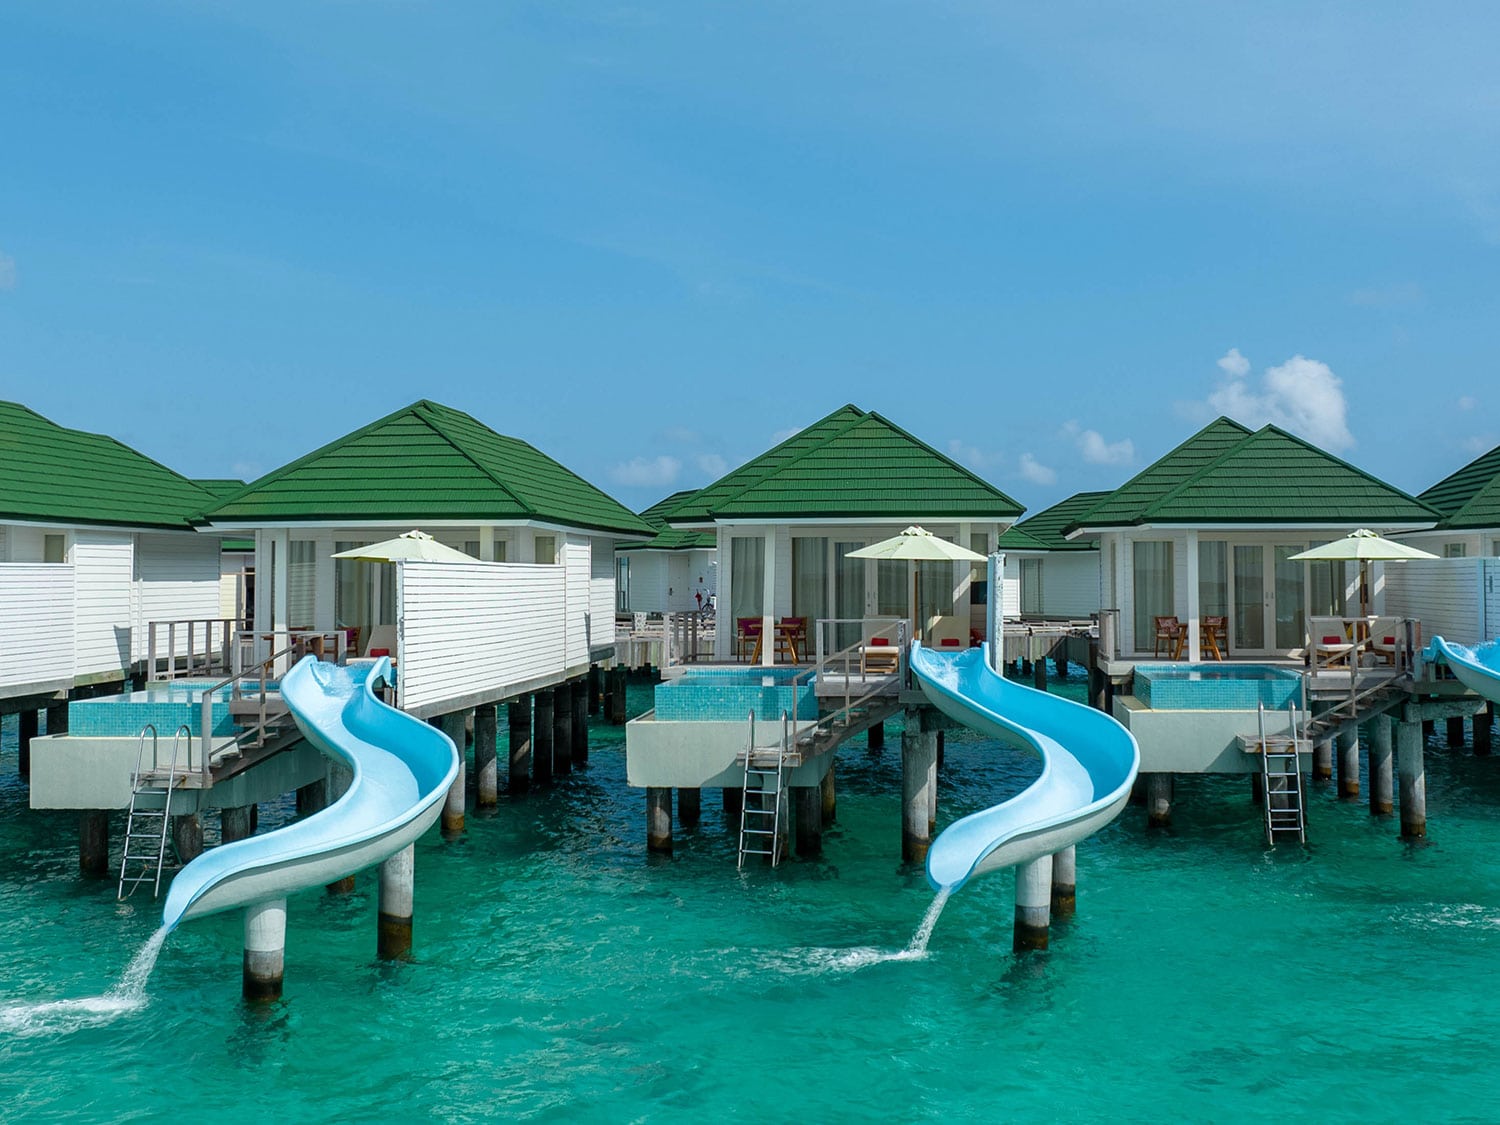 The overwater villas at Siyam World in the Maldives